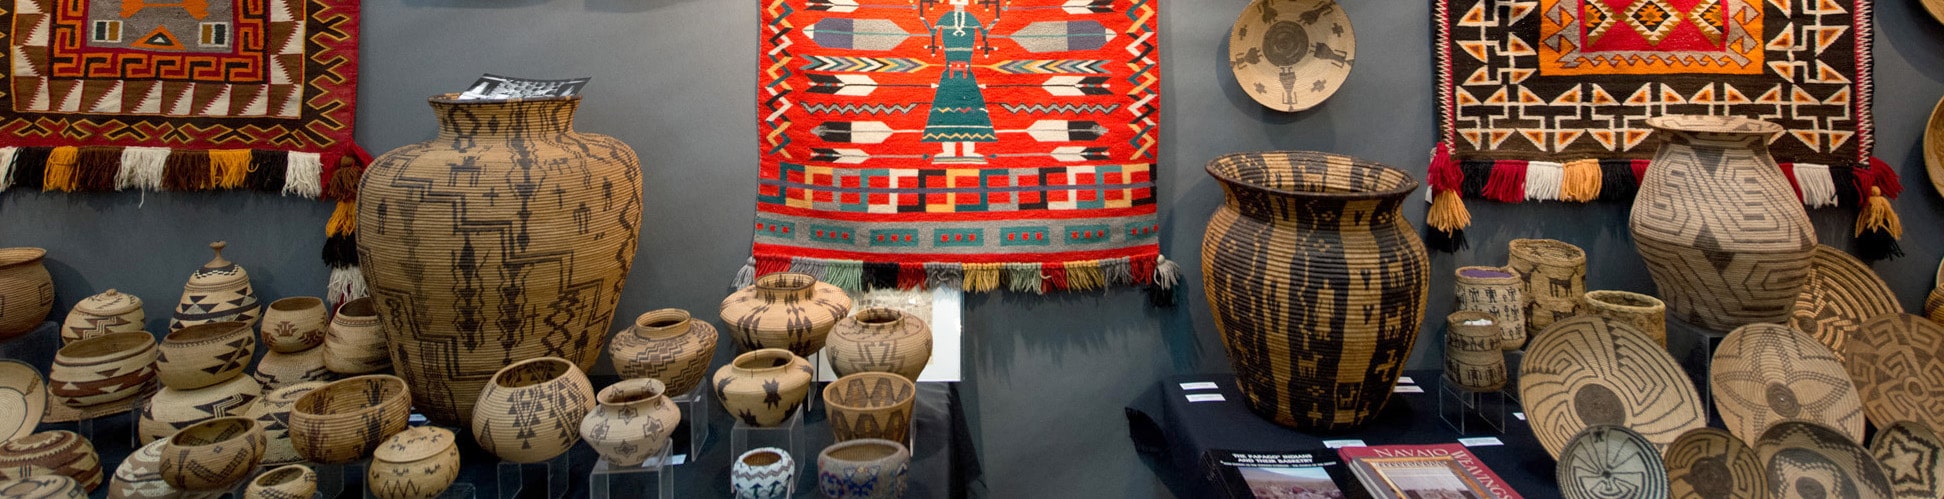 American Indian Art Show Santa Fe | artfairmag.com